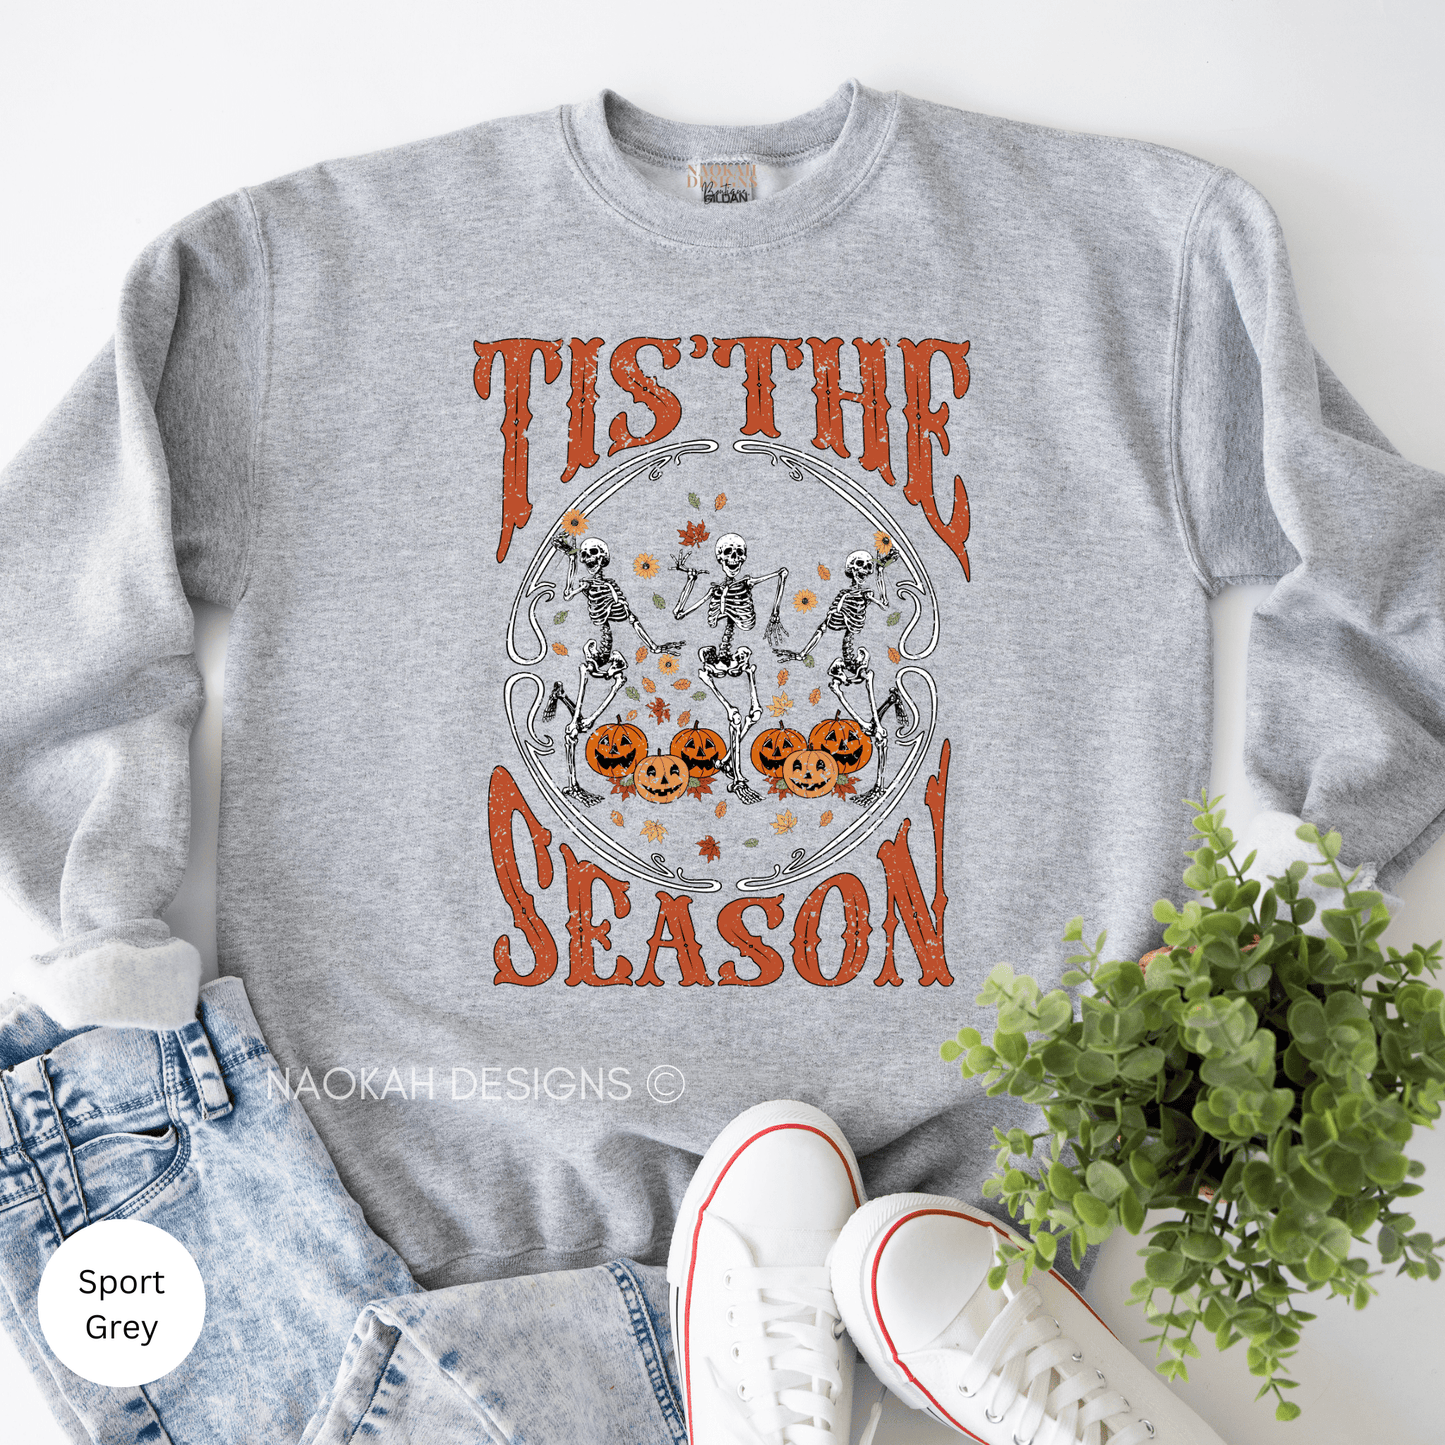 tis' the season sweater, fall sweatshirt, halloween shirt, fall shirt, autumn shirt, pumpkin shirt, dancing skeletons floral sweater